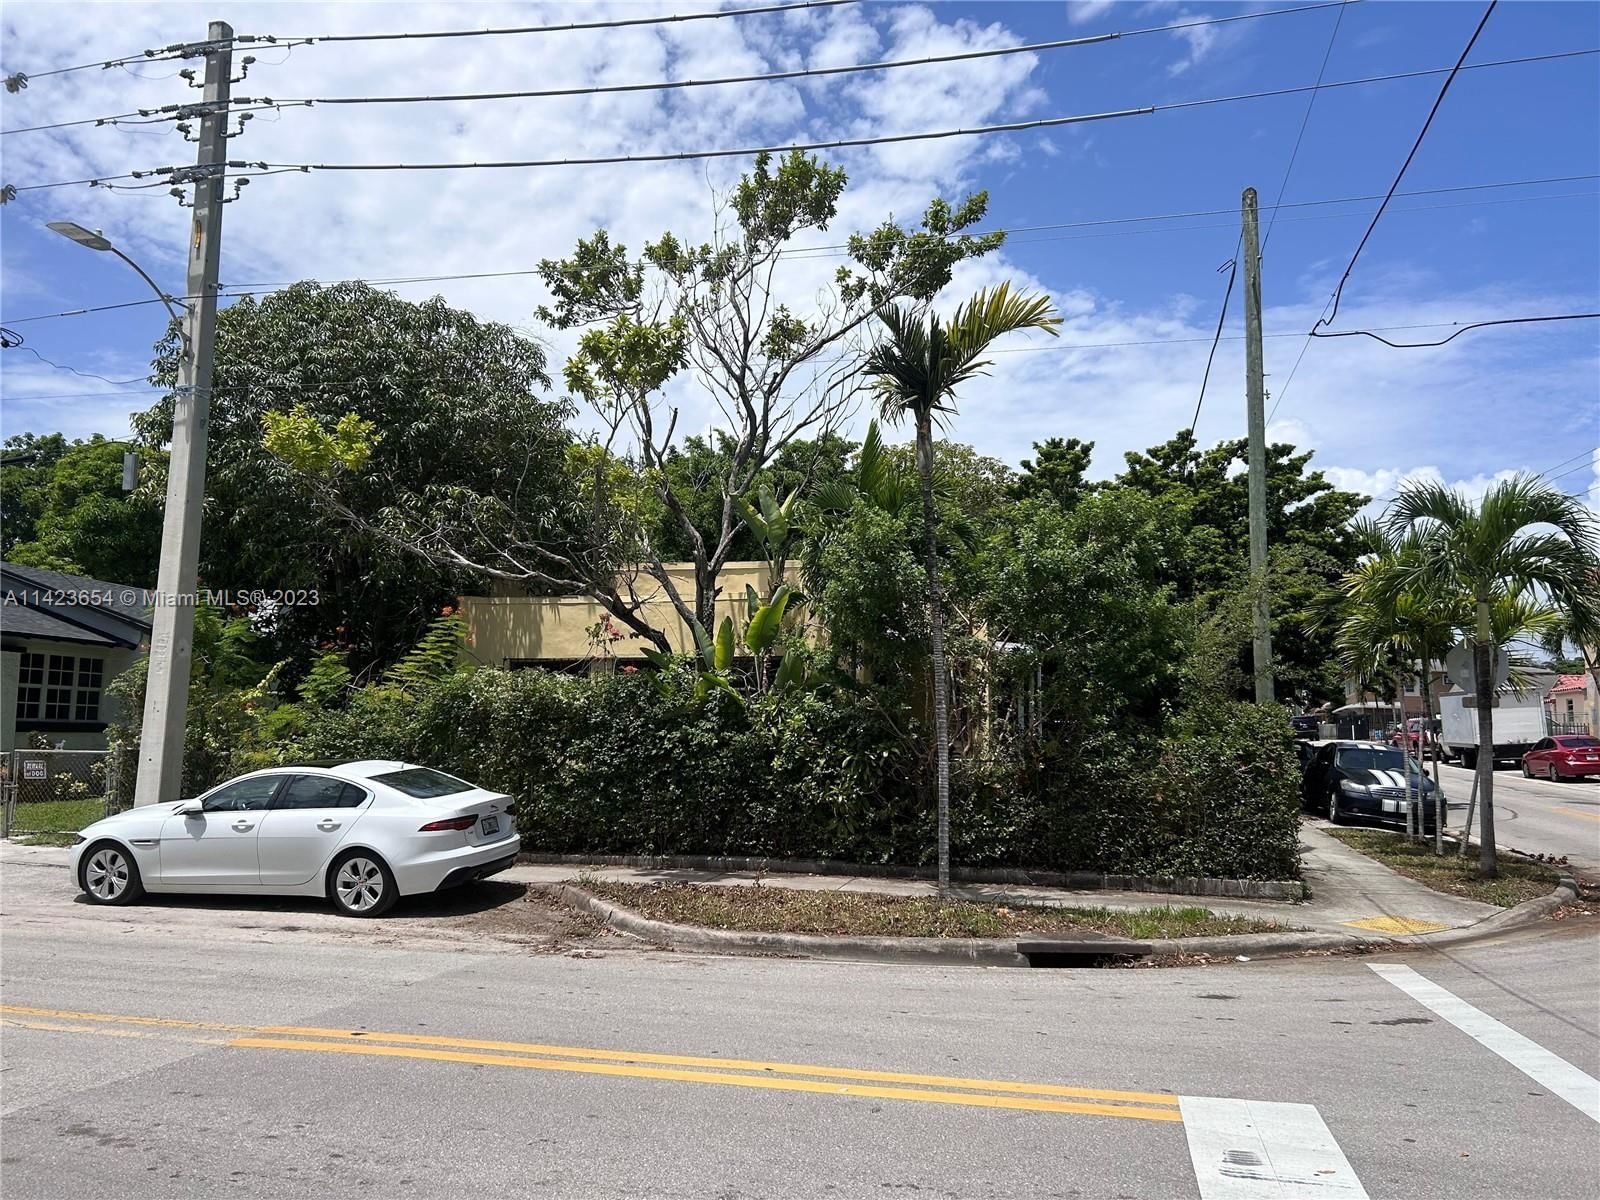 Real estate property located at 904 10th Ave, Miami-Dade County, Miami, FL